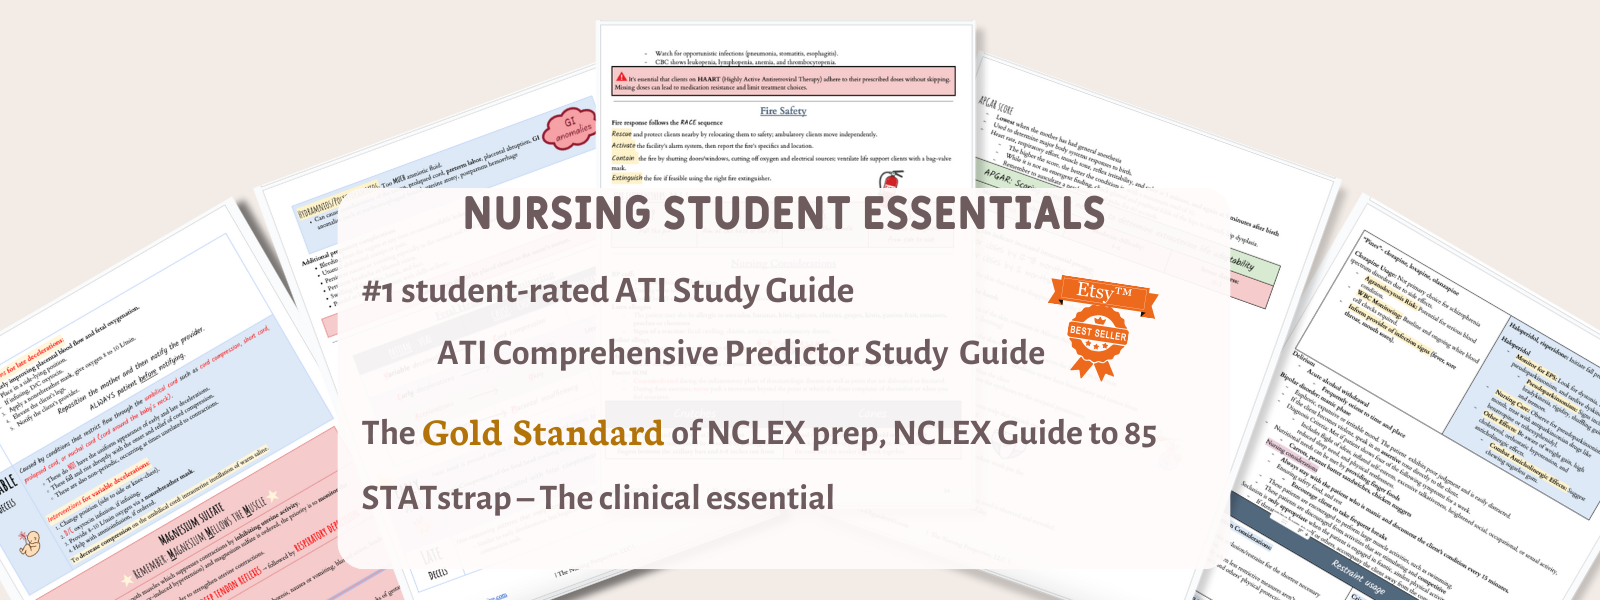 Nursing Student study essentials for nursing school, nclex guide to 85, nursing perspective, ati comprehensive predictor 